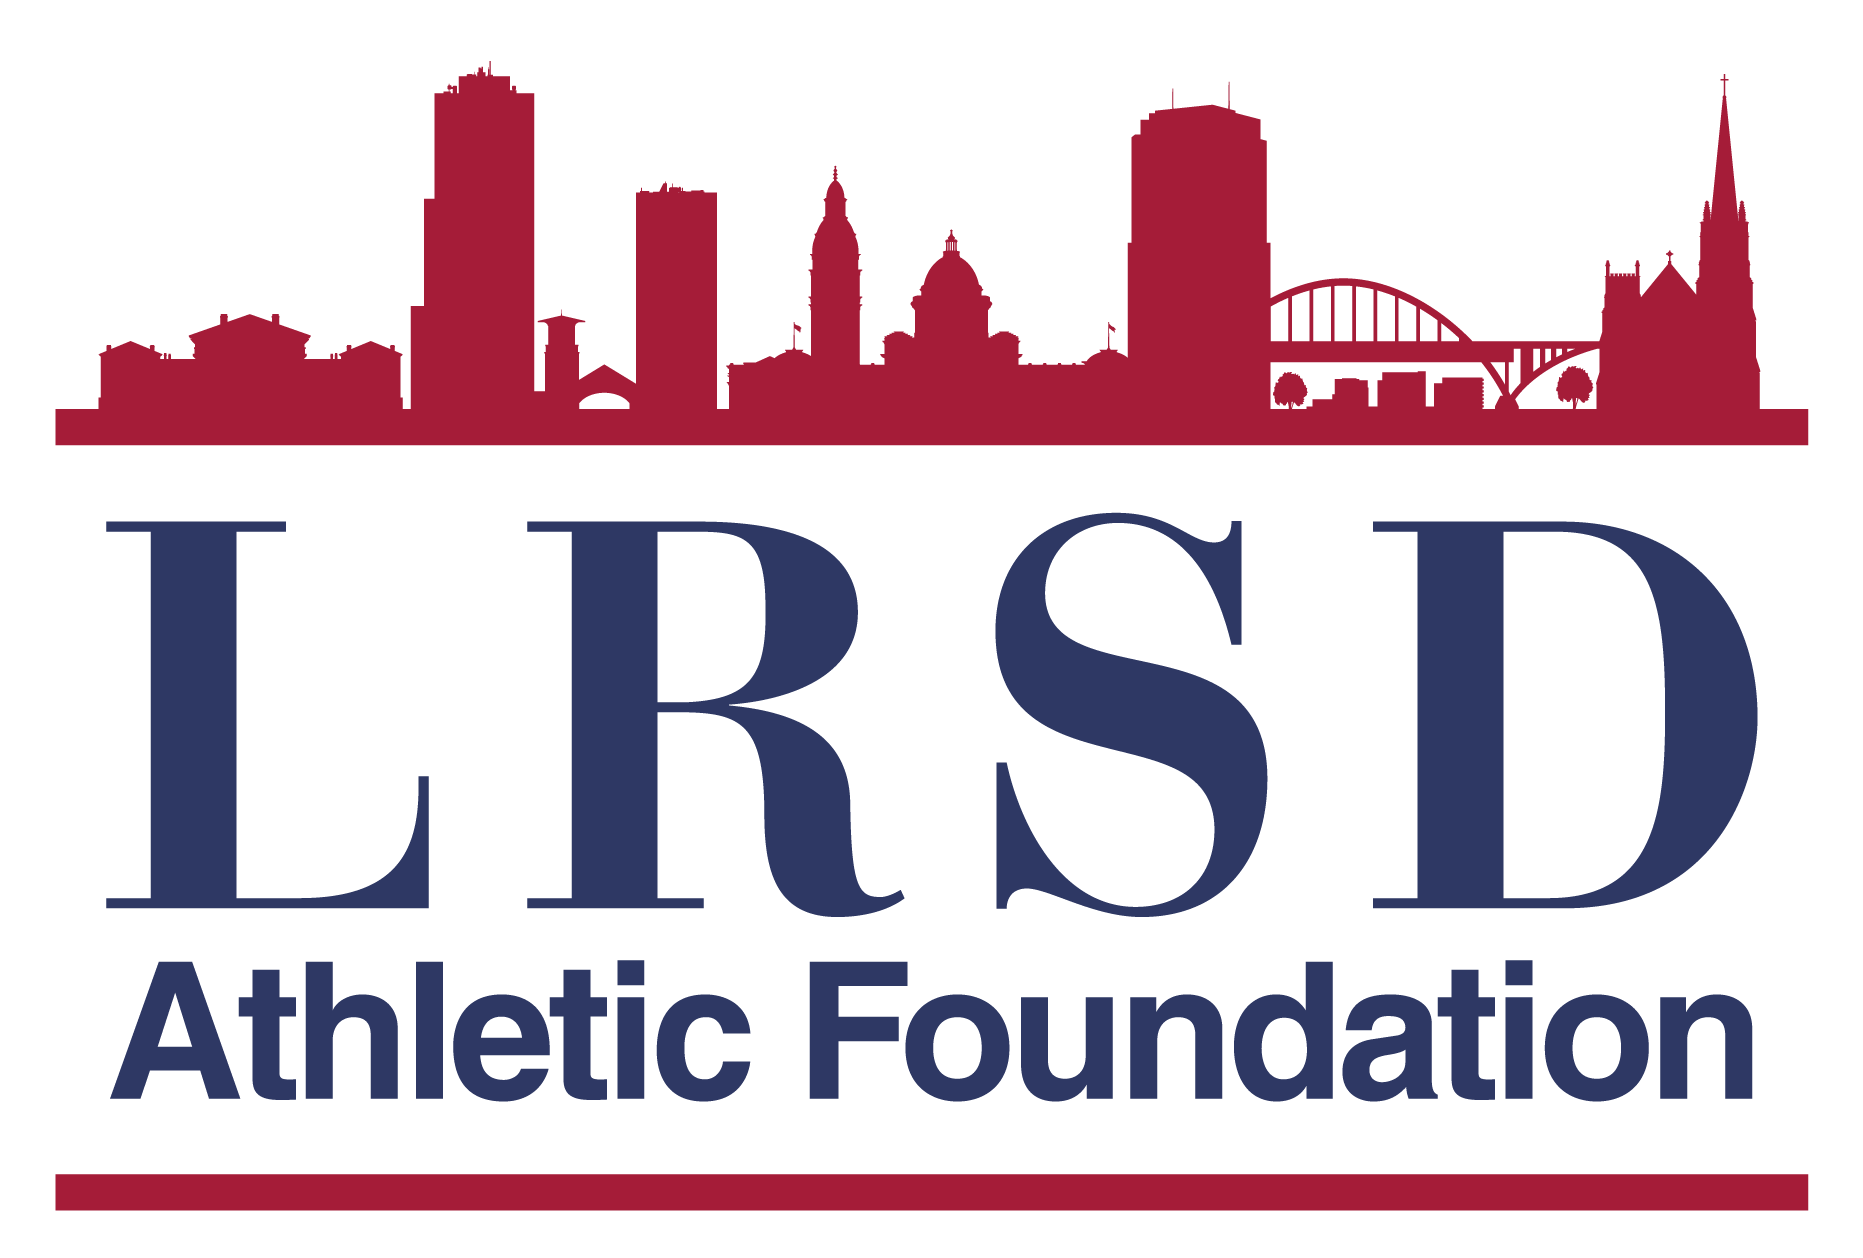 LRSD Athletic Foundation